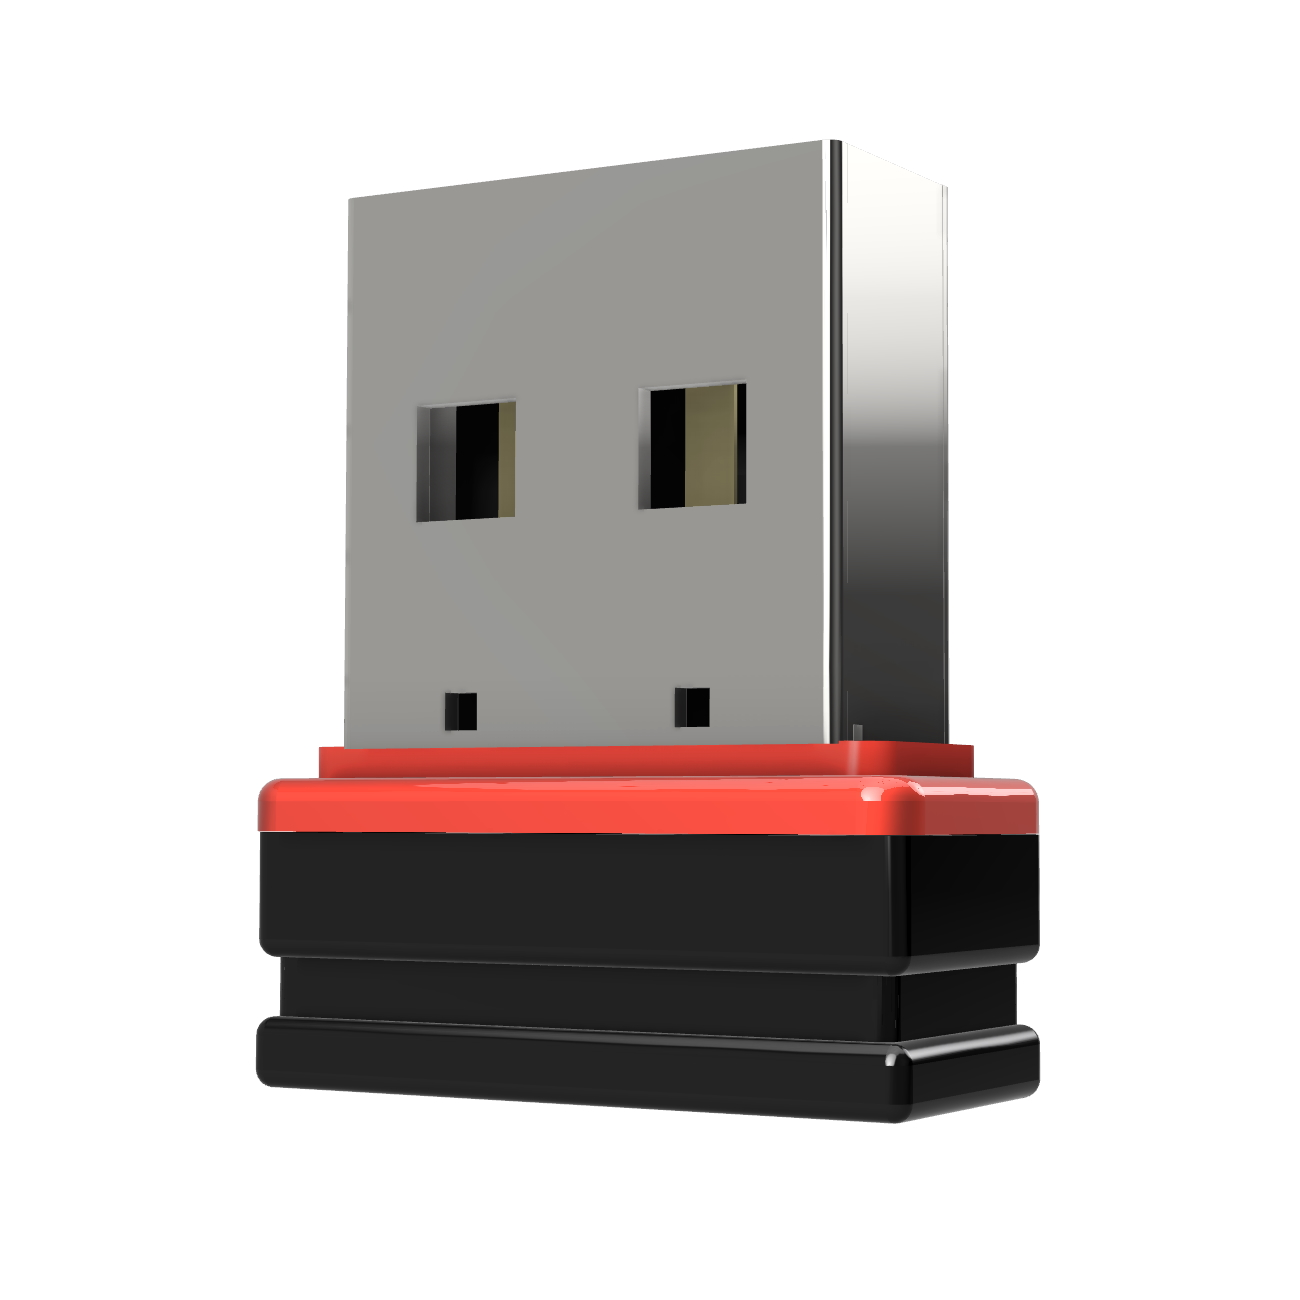 GB) USB-Stick ®ULTRA GERMANY (Schwarz/Rot, 16 P1 Mini USB